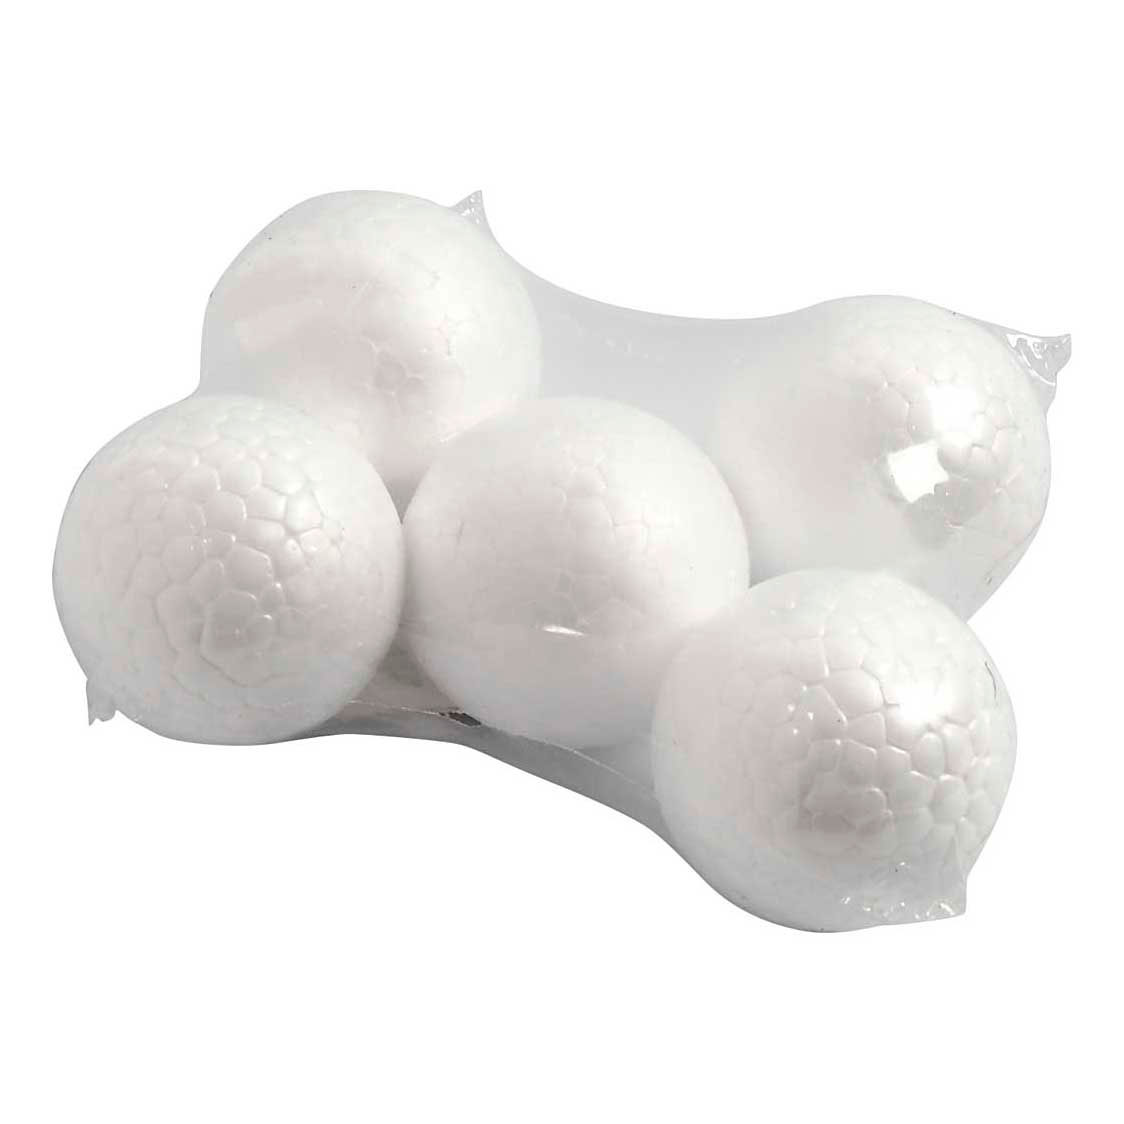 Boules de polystyrène blanches, 5 pcs.